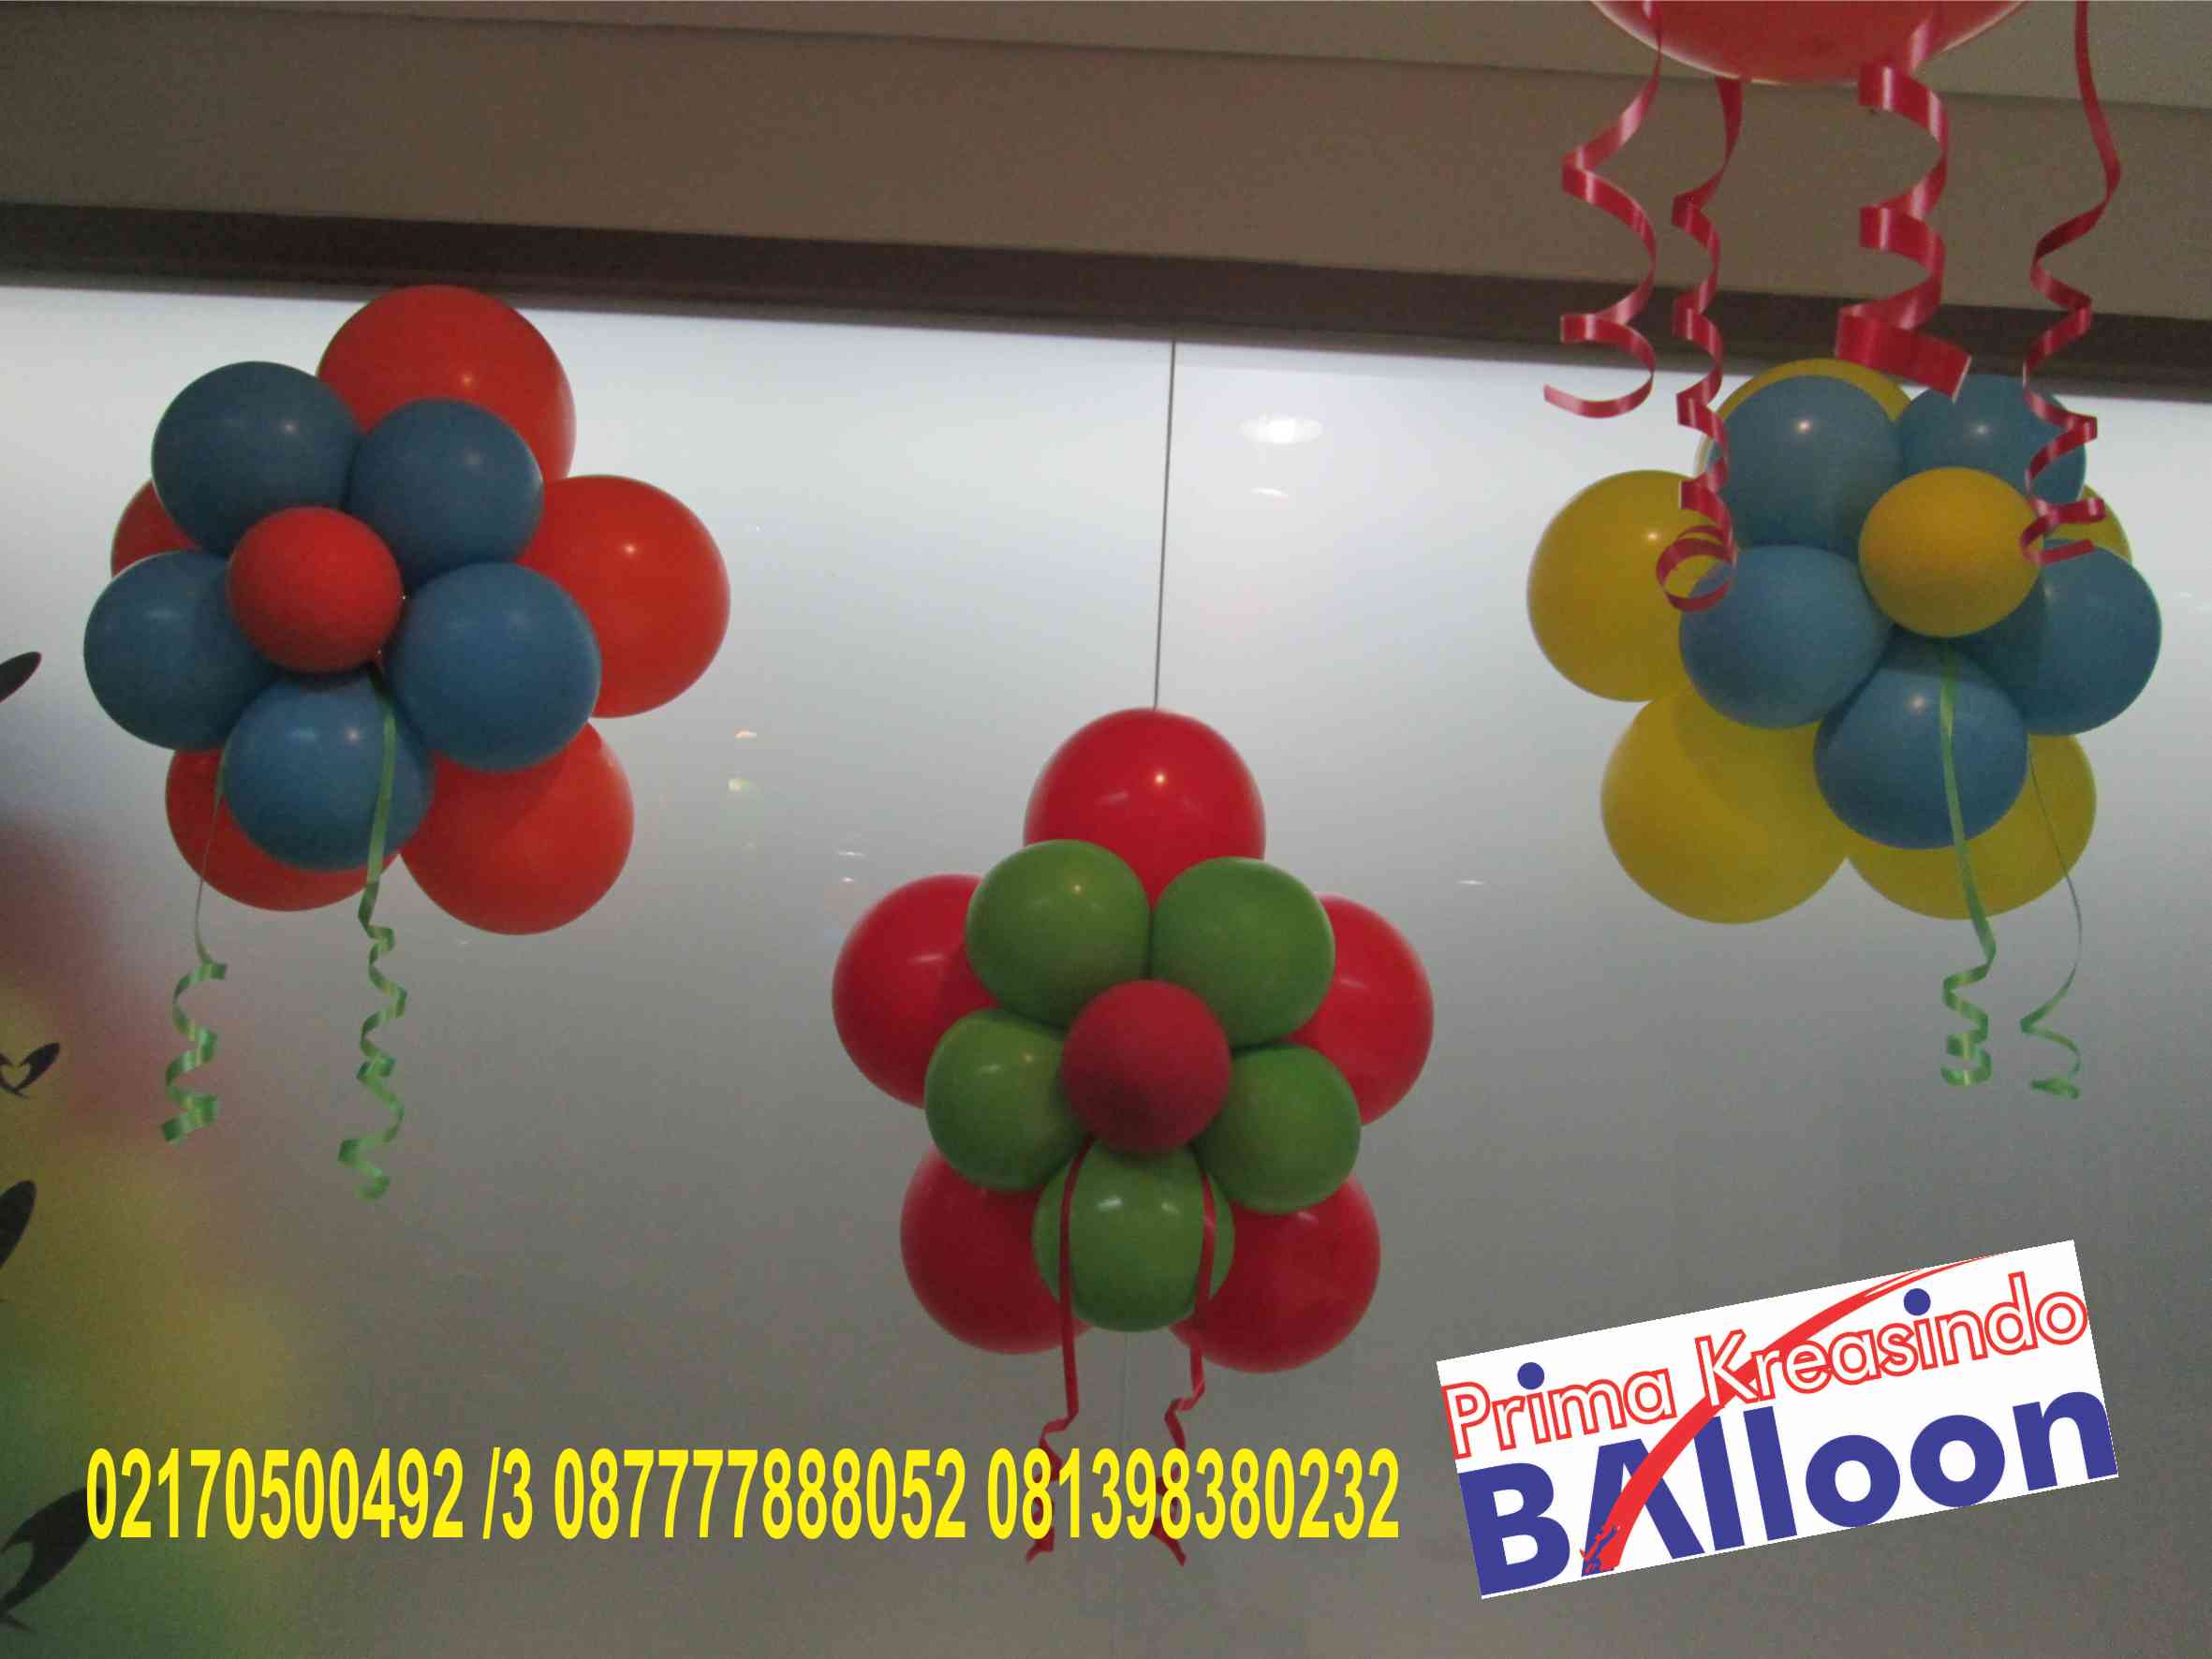  Dekorasi  balon  di Rs Mayapada modernland tangerang 